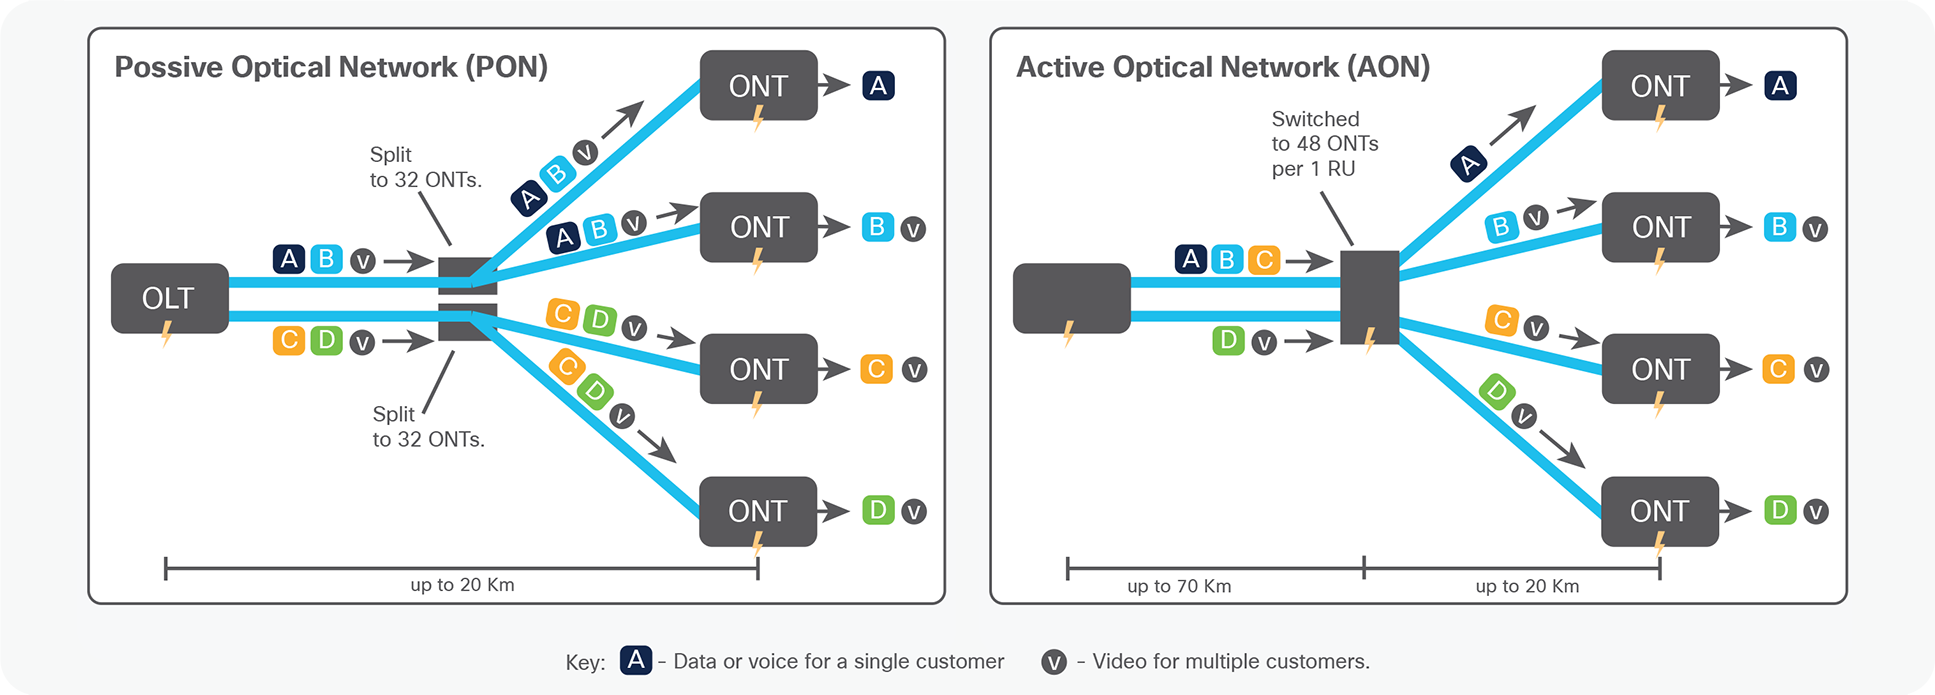 Possive Optical Network